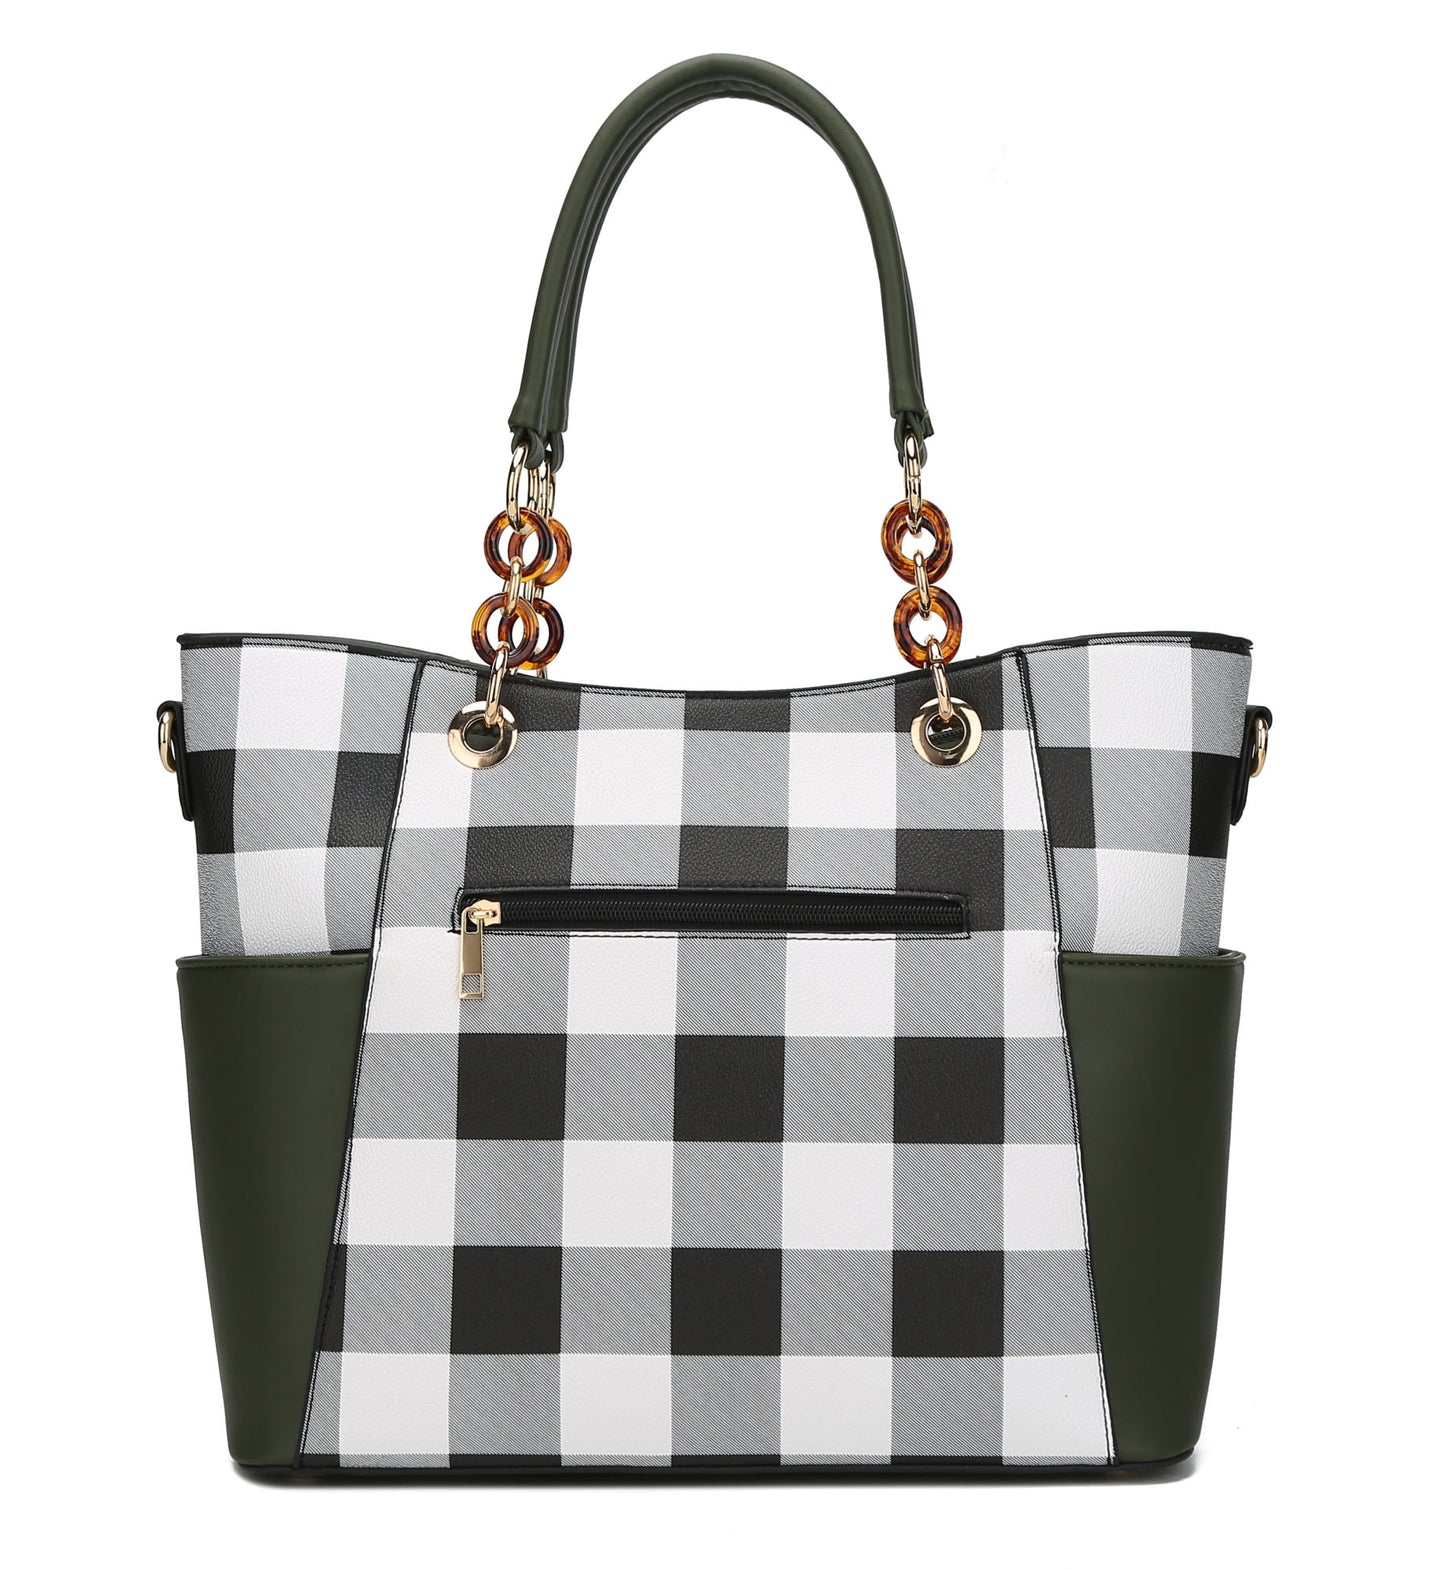 MKF Collection Bonita Checker Tote Handbag & Wallet Set Women by Mia K